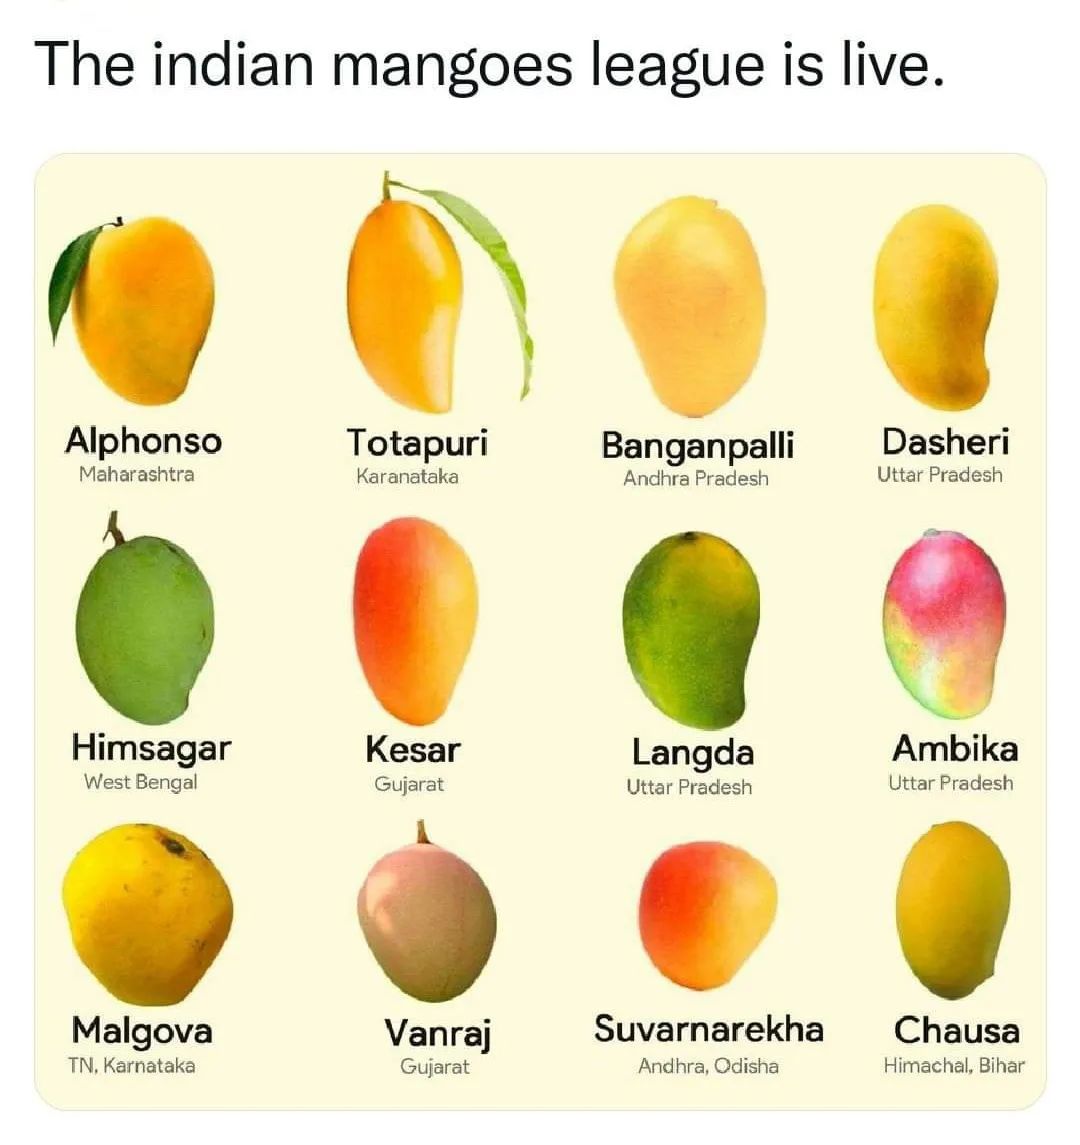 Mango lovers hit the comment section and tell me your favourite mango 🥭

#mangorecipes #mangomango #mango #summervibes #summerfruit #summertime #summerrecipes #mangolover #indianblogger #indianfruits #fruits #food #commentbelow #fridayfood #favourite #favourtiefood #Chefkunal